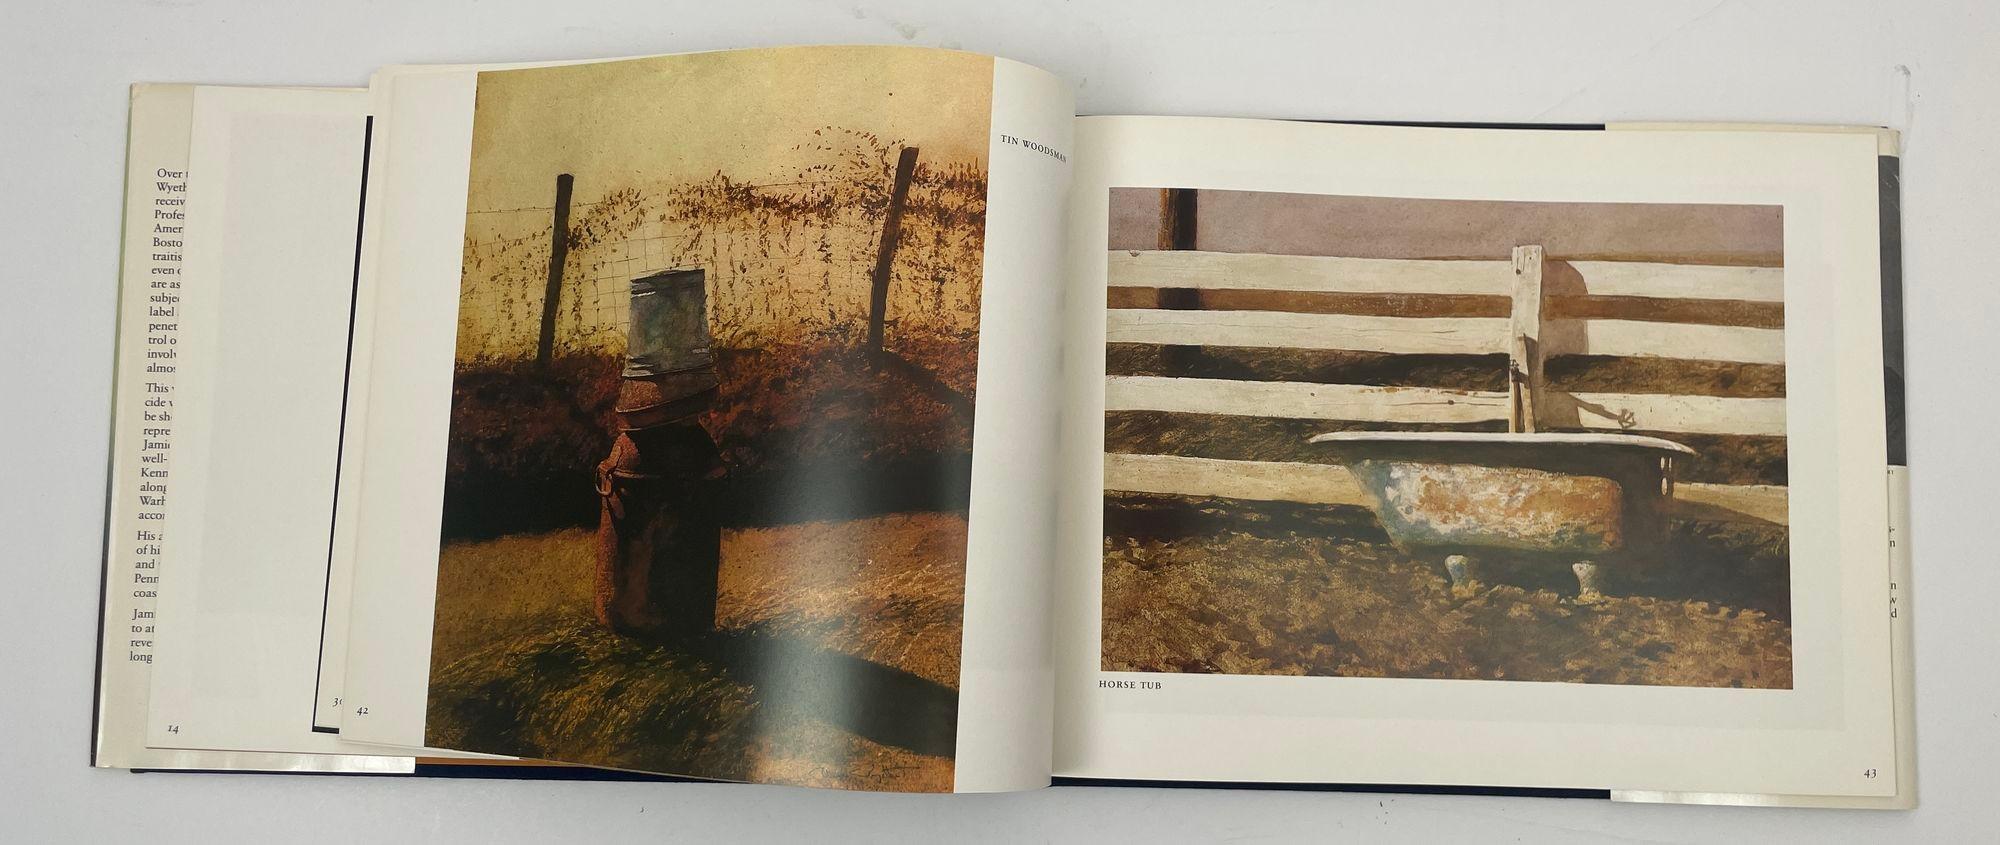 Jamie Wyeth by Jamie Wyeth Hardcover Book 1980 1st Ed. For Sale 2